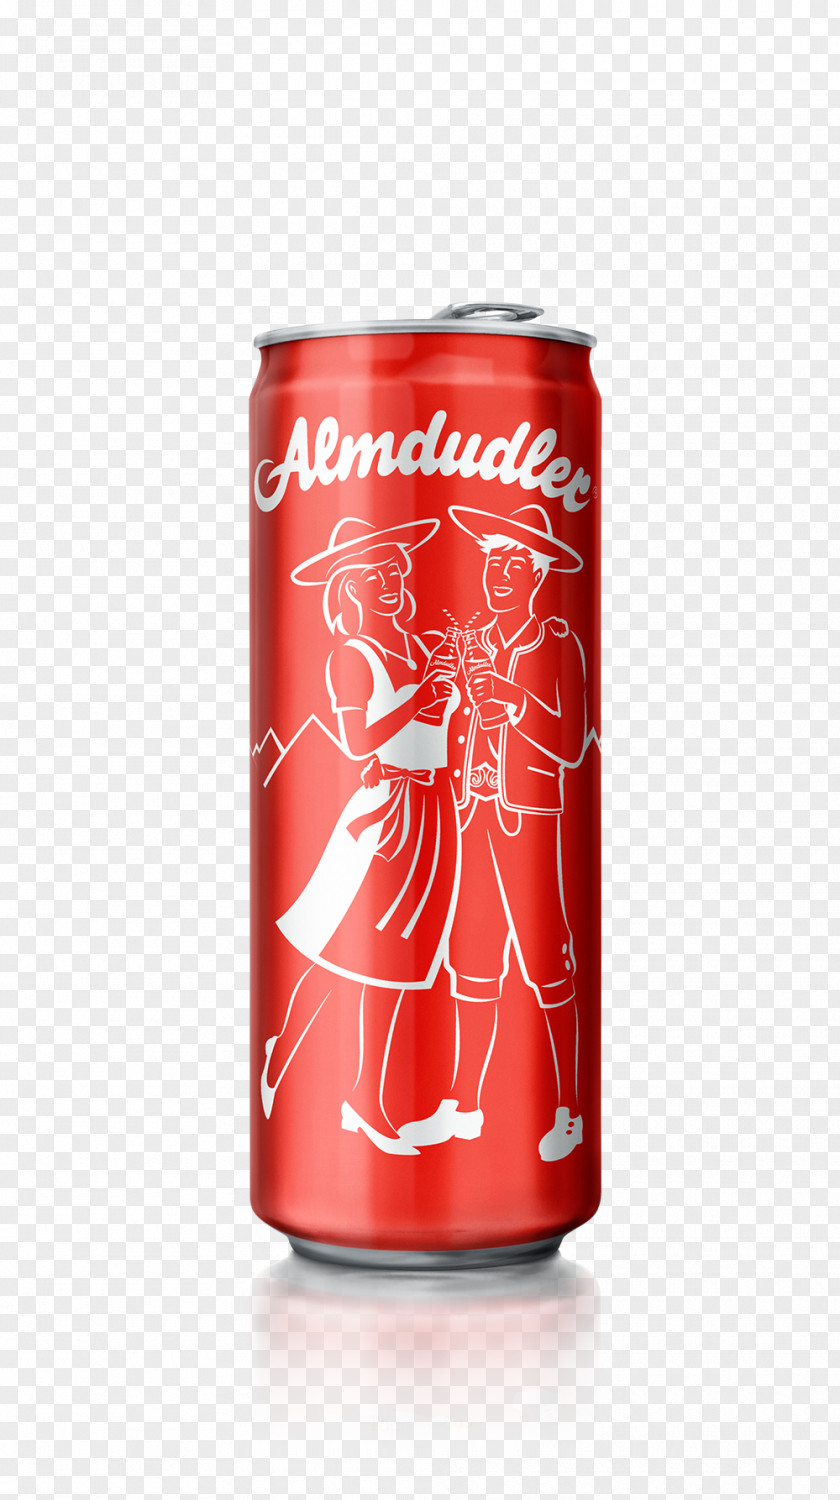 Lemonade Almdudler Fizzy Drinks Kräuterlimonade Liter PNG